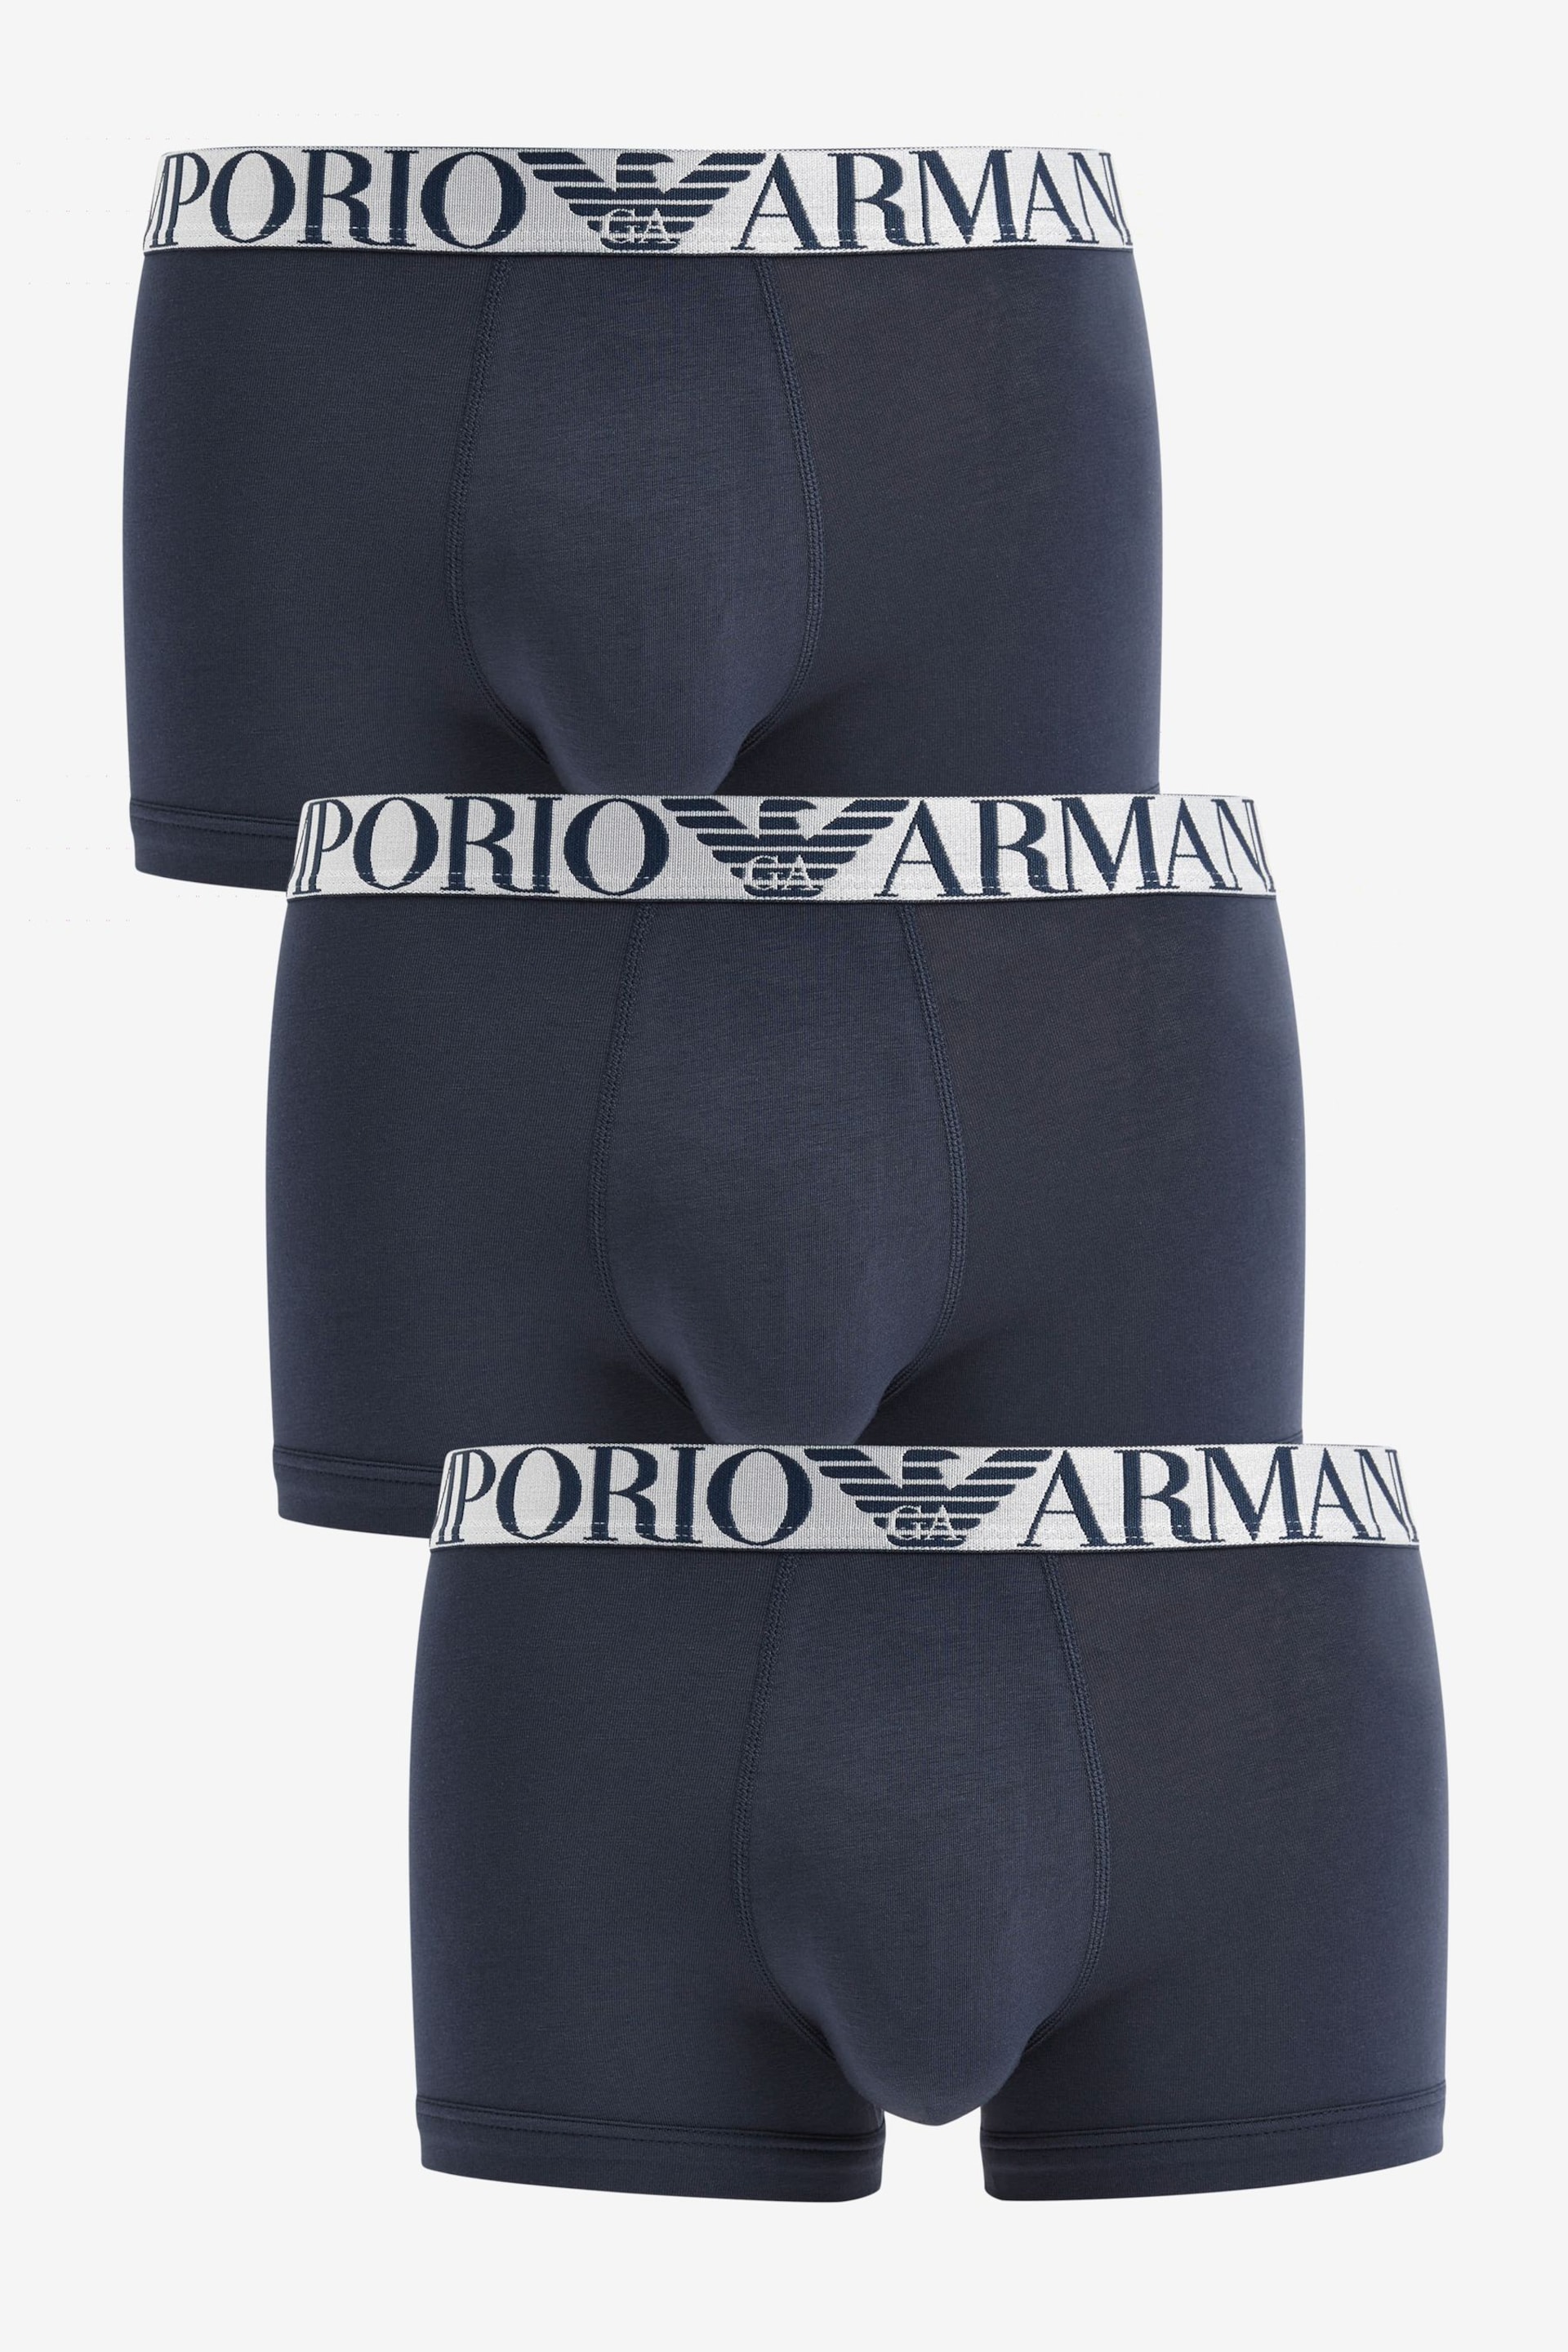 Emporio Armani Boxers 3 Pack - Image 1 of 3